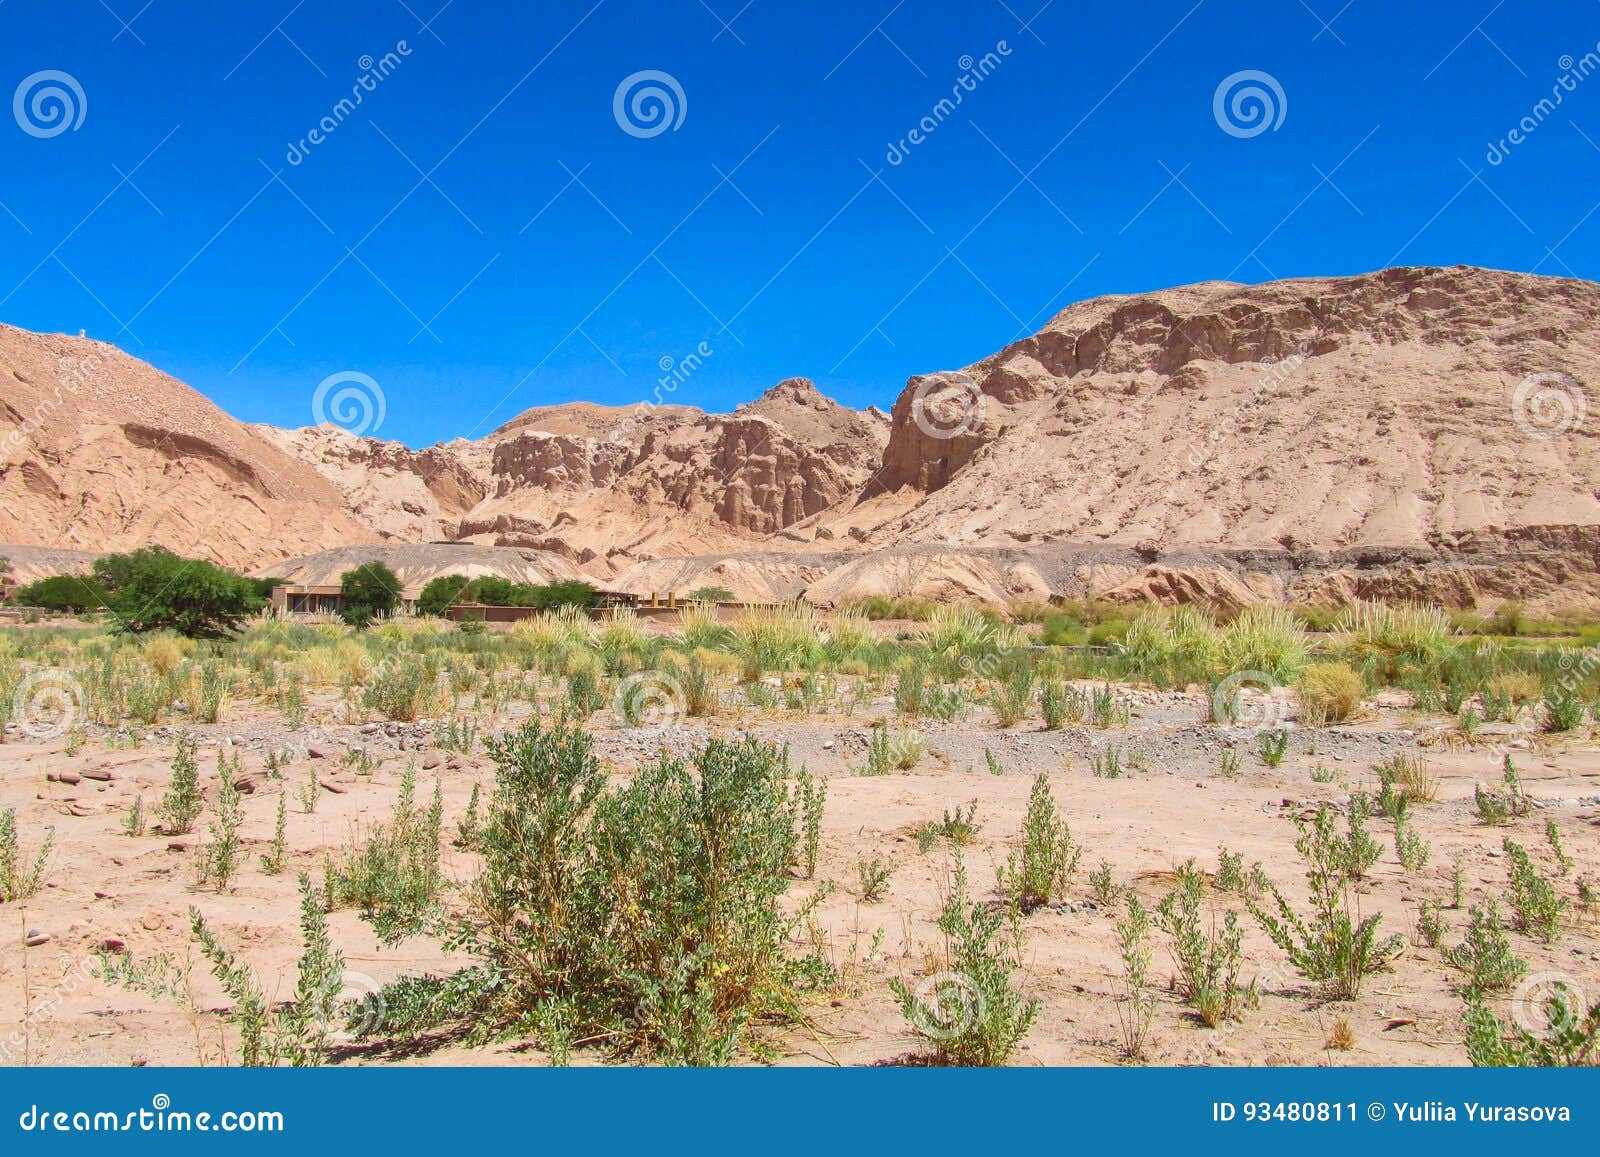 Atacama Desert Arid Flat Land An Mountains Stock Image Image Of